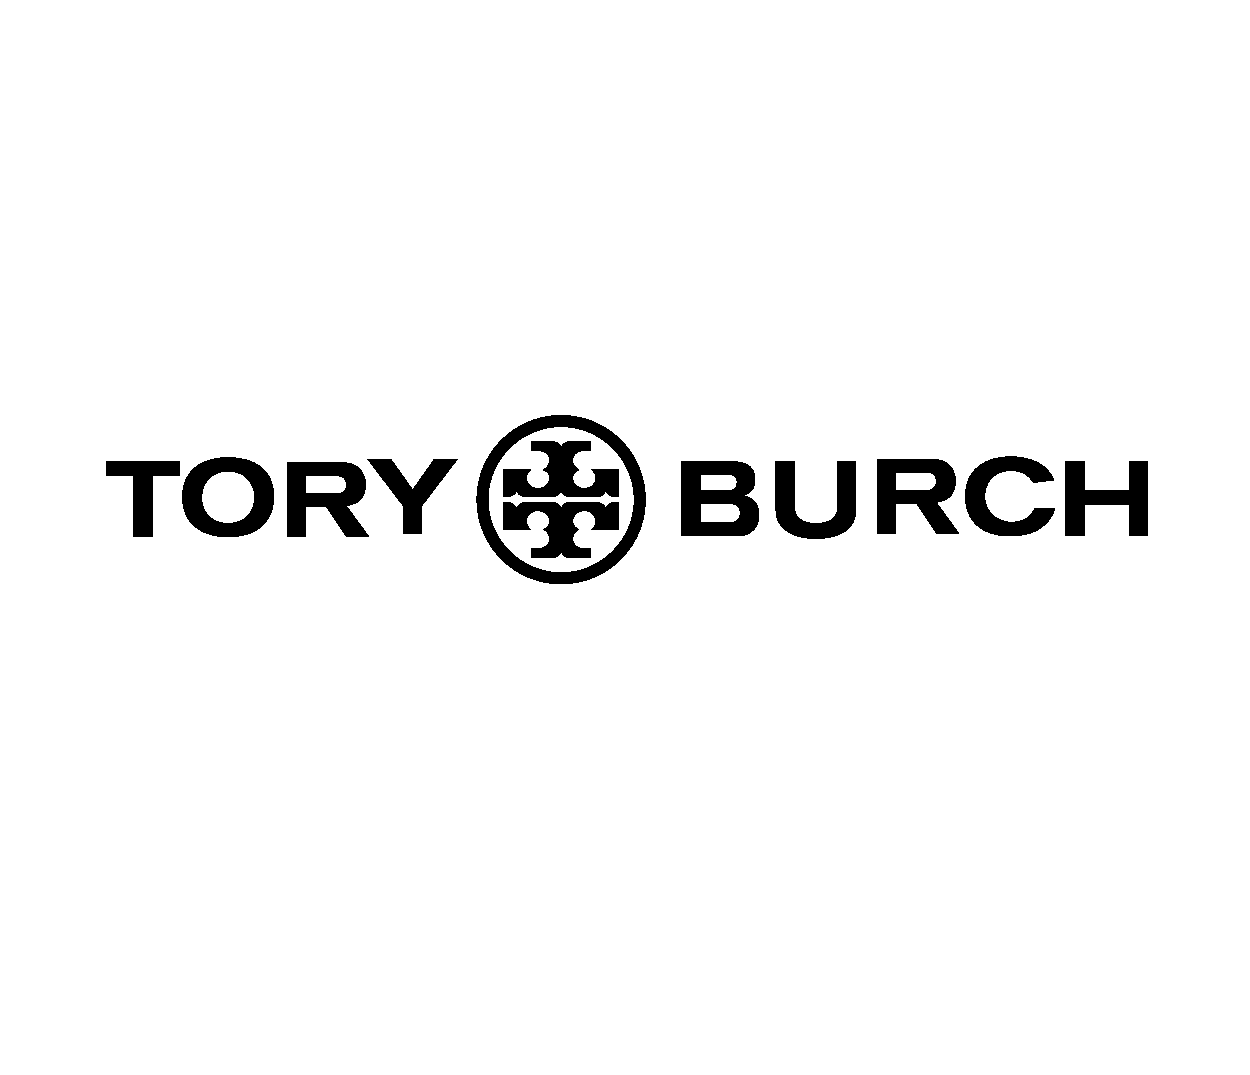 Toryburch